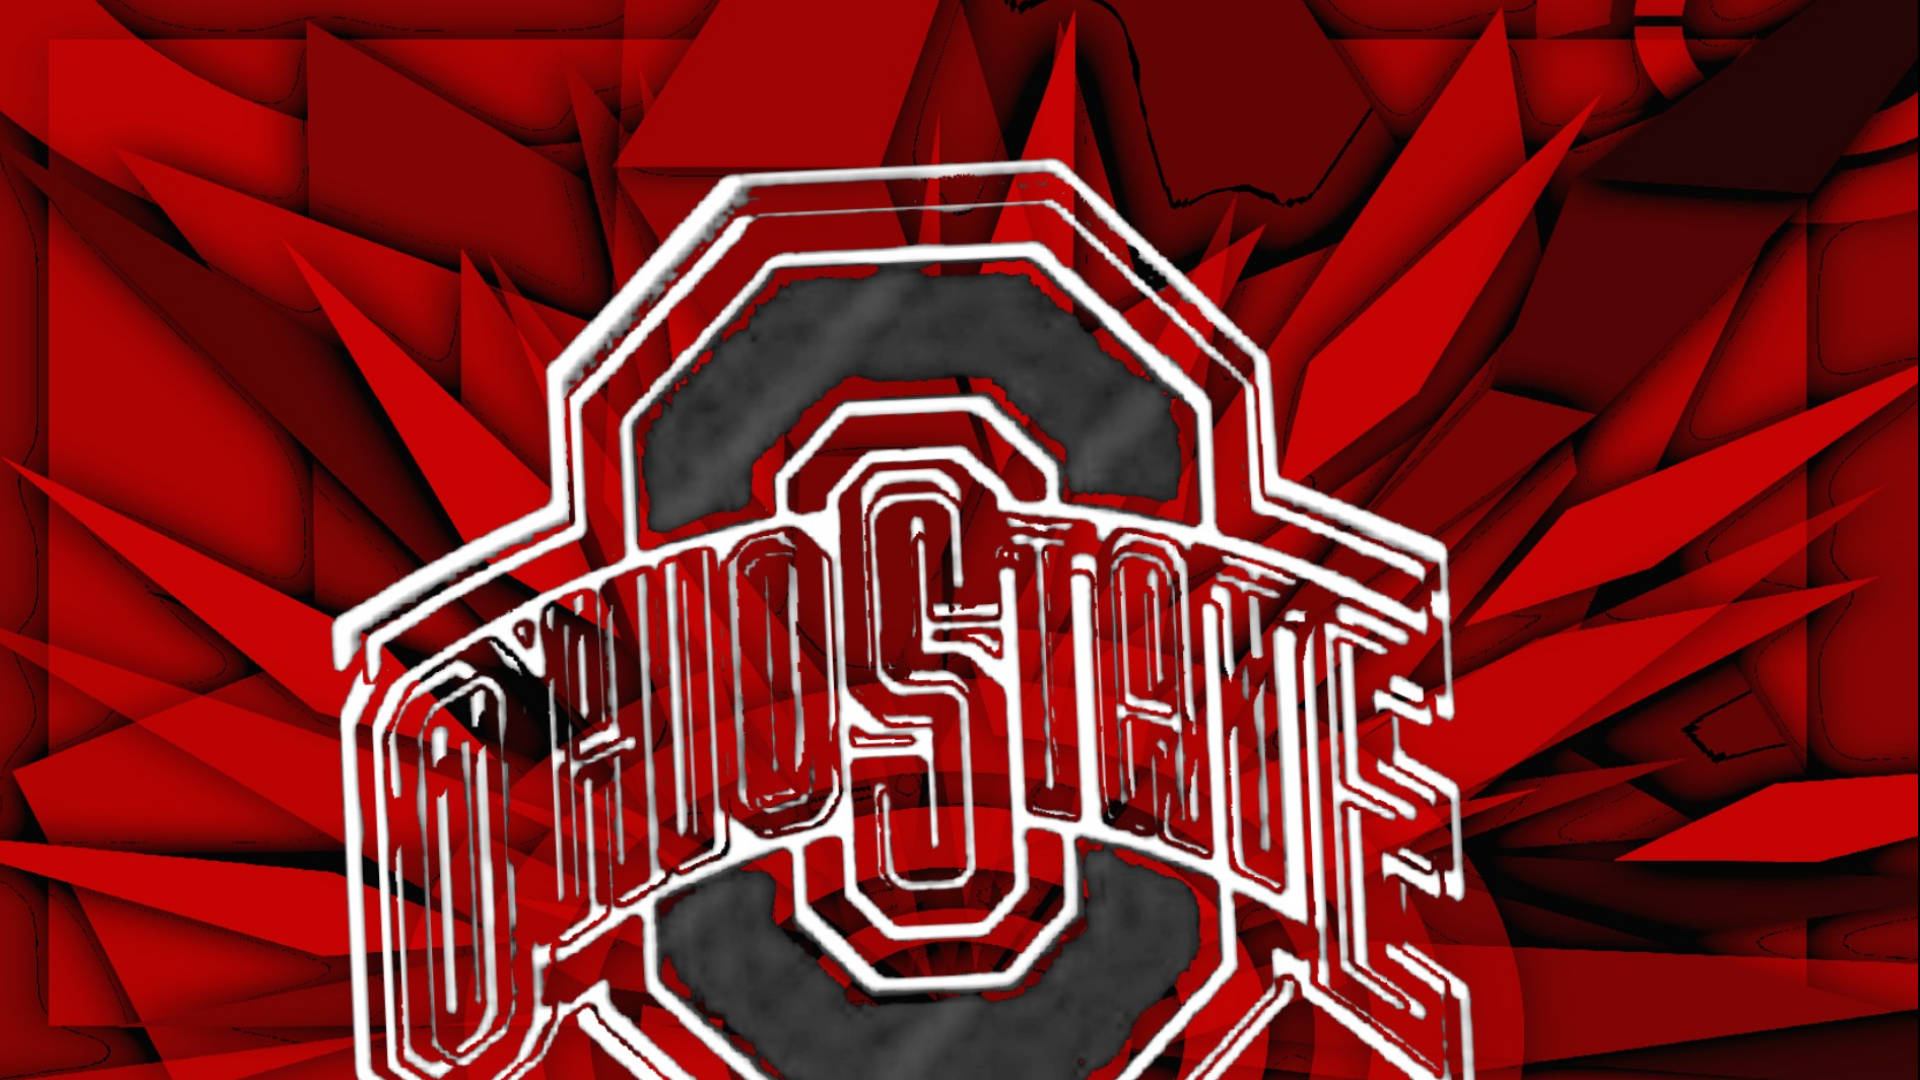 Ohio State Team Wallpaper